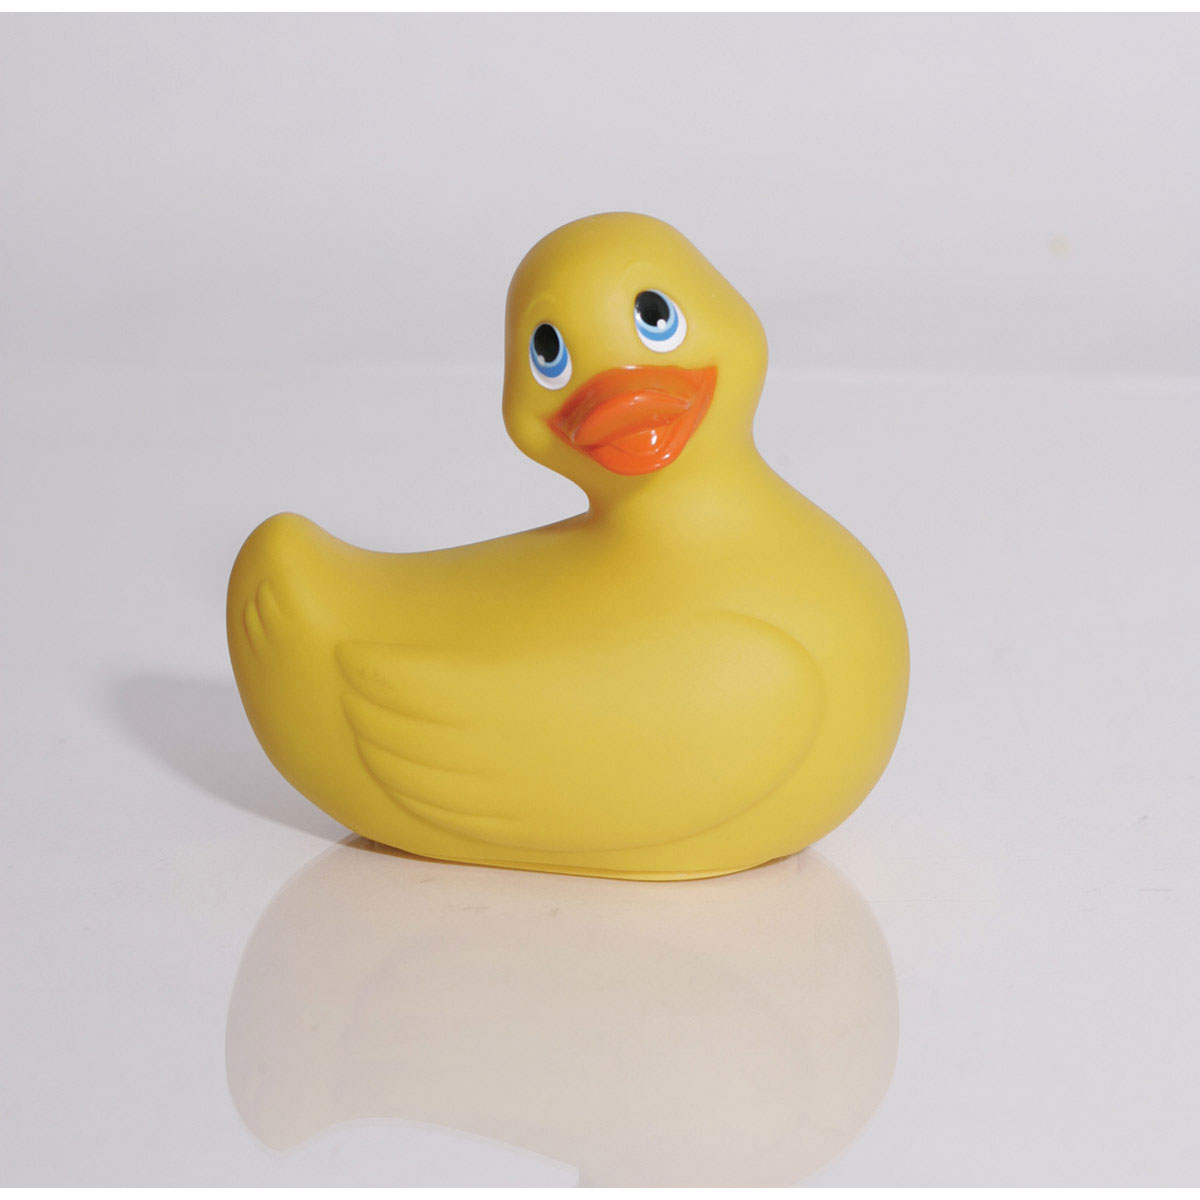 I Rub My Duckie 2.0 - Yellow